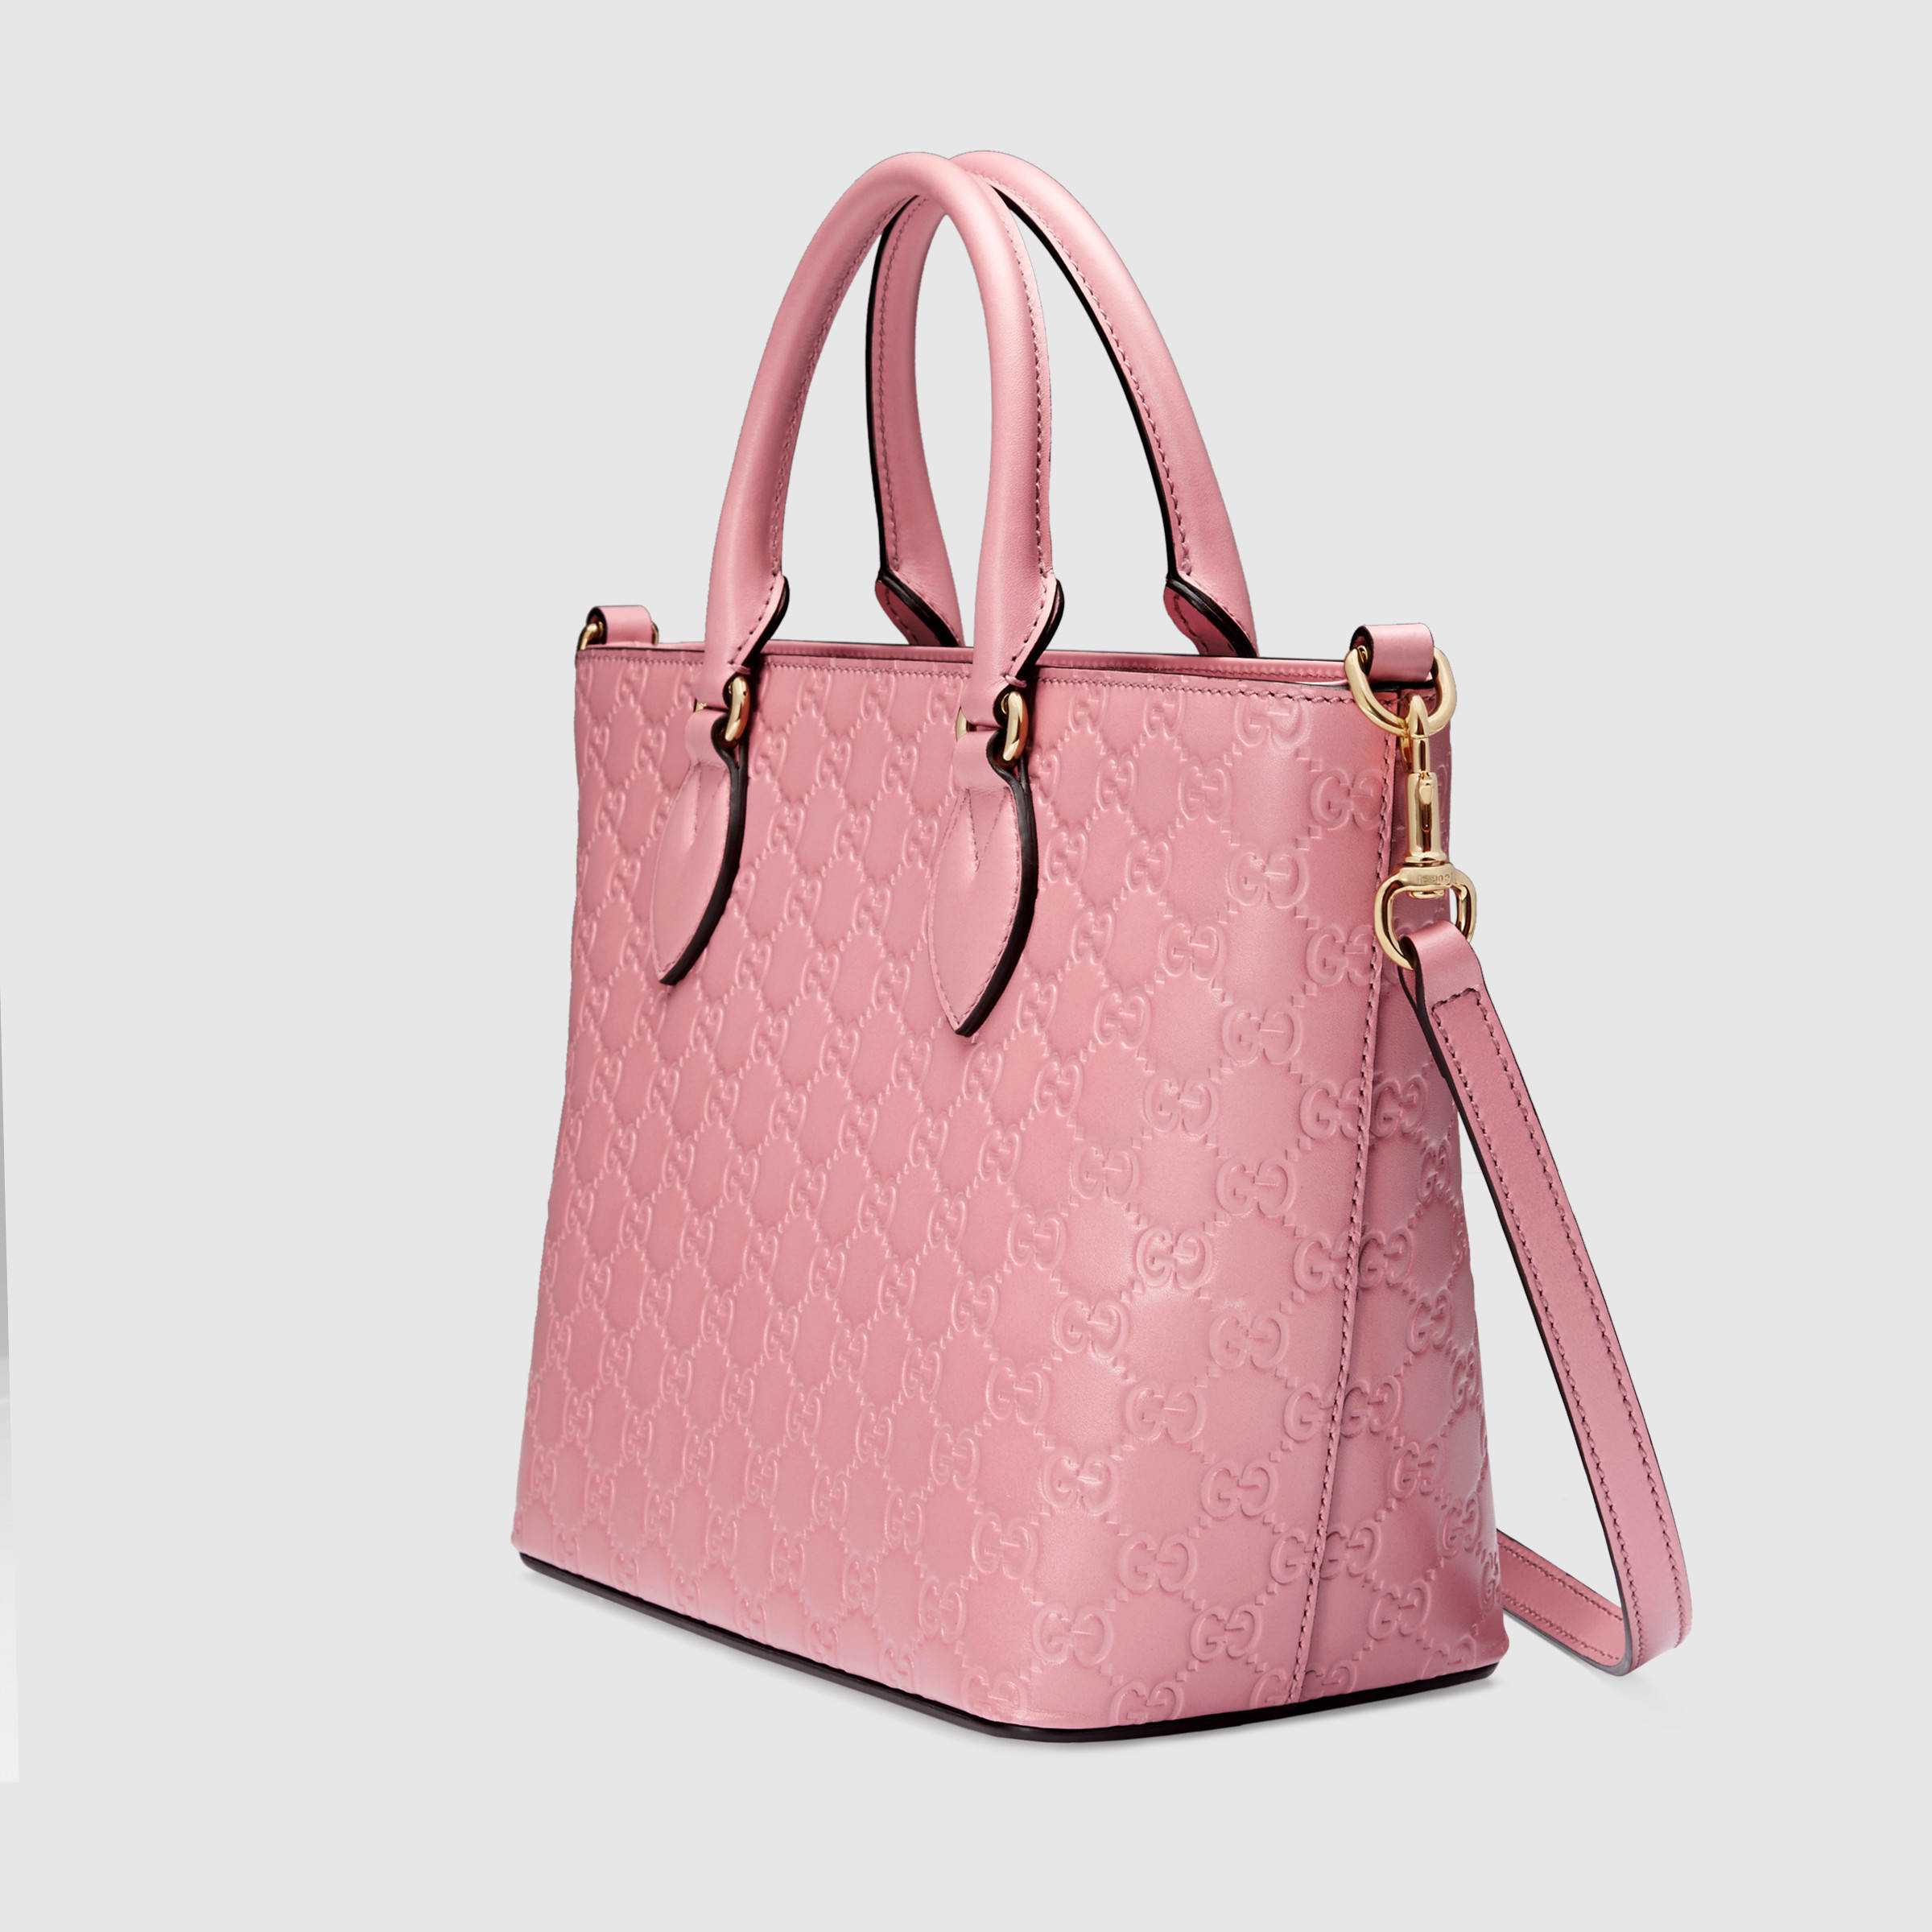 gucci pink leather handbag